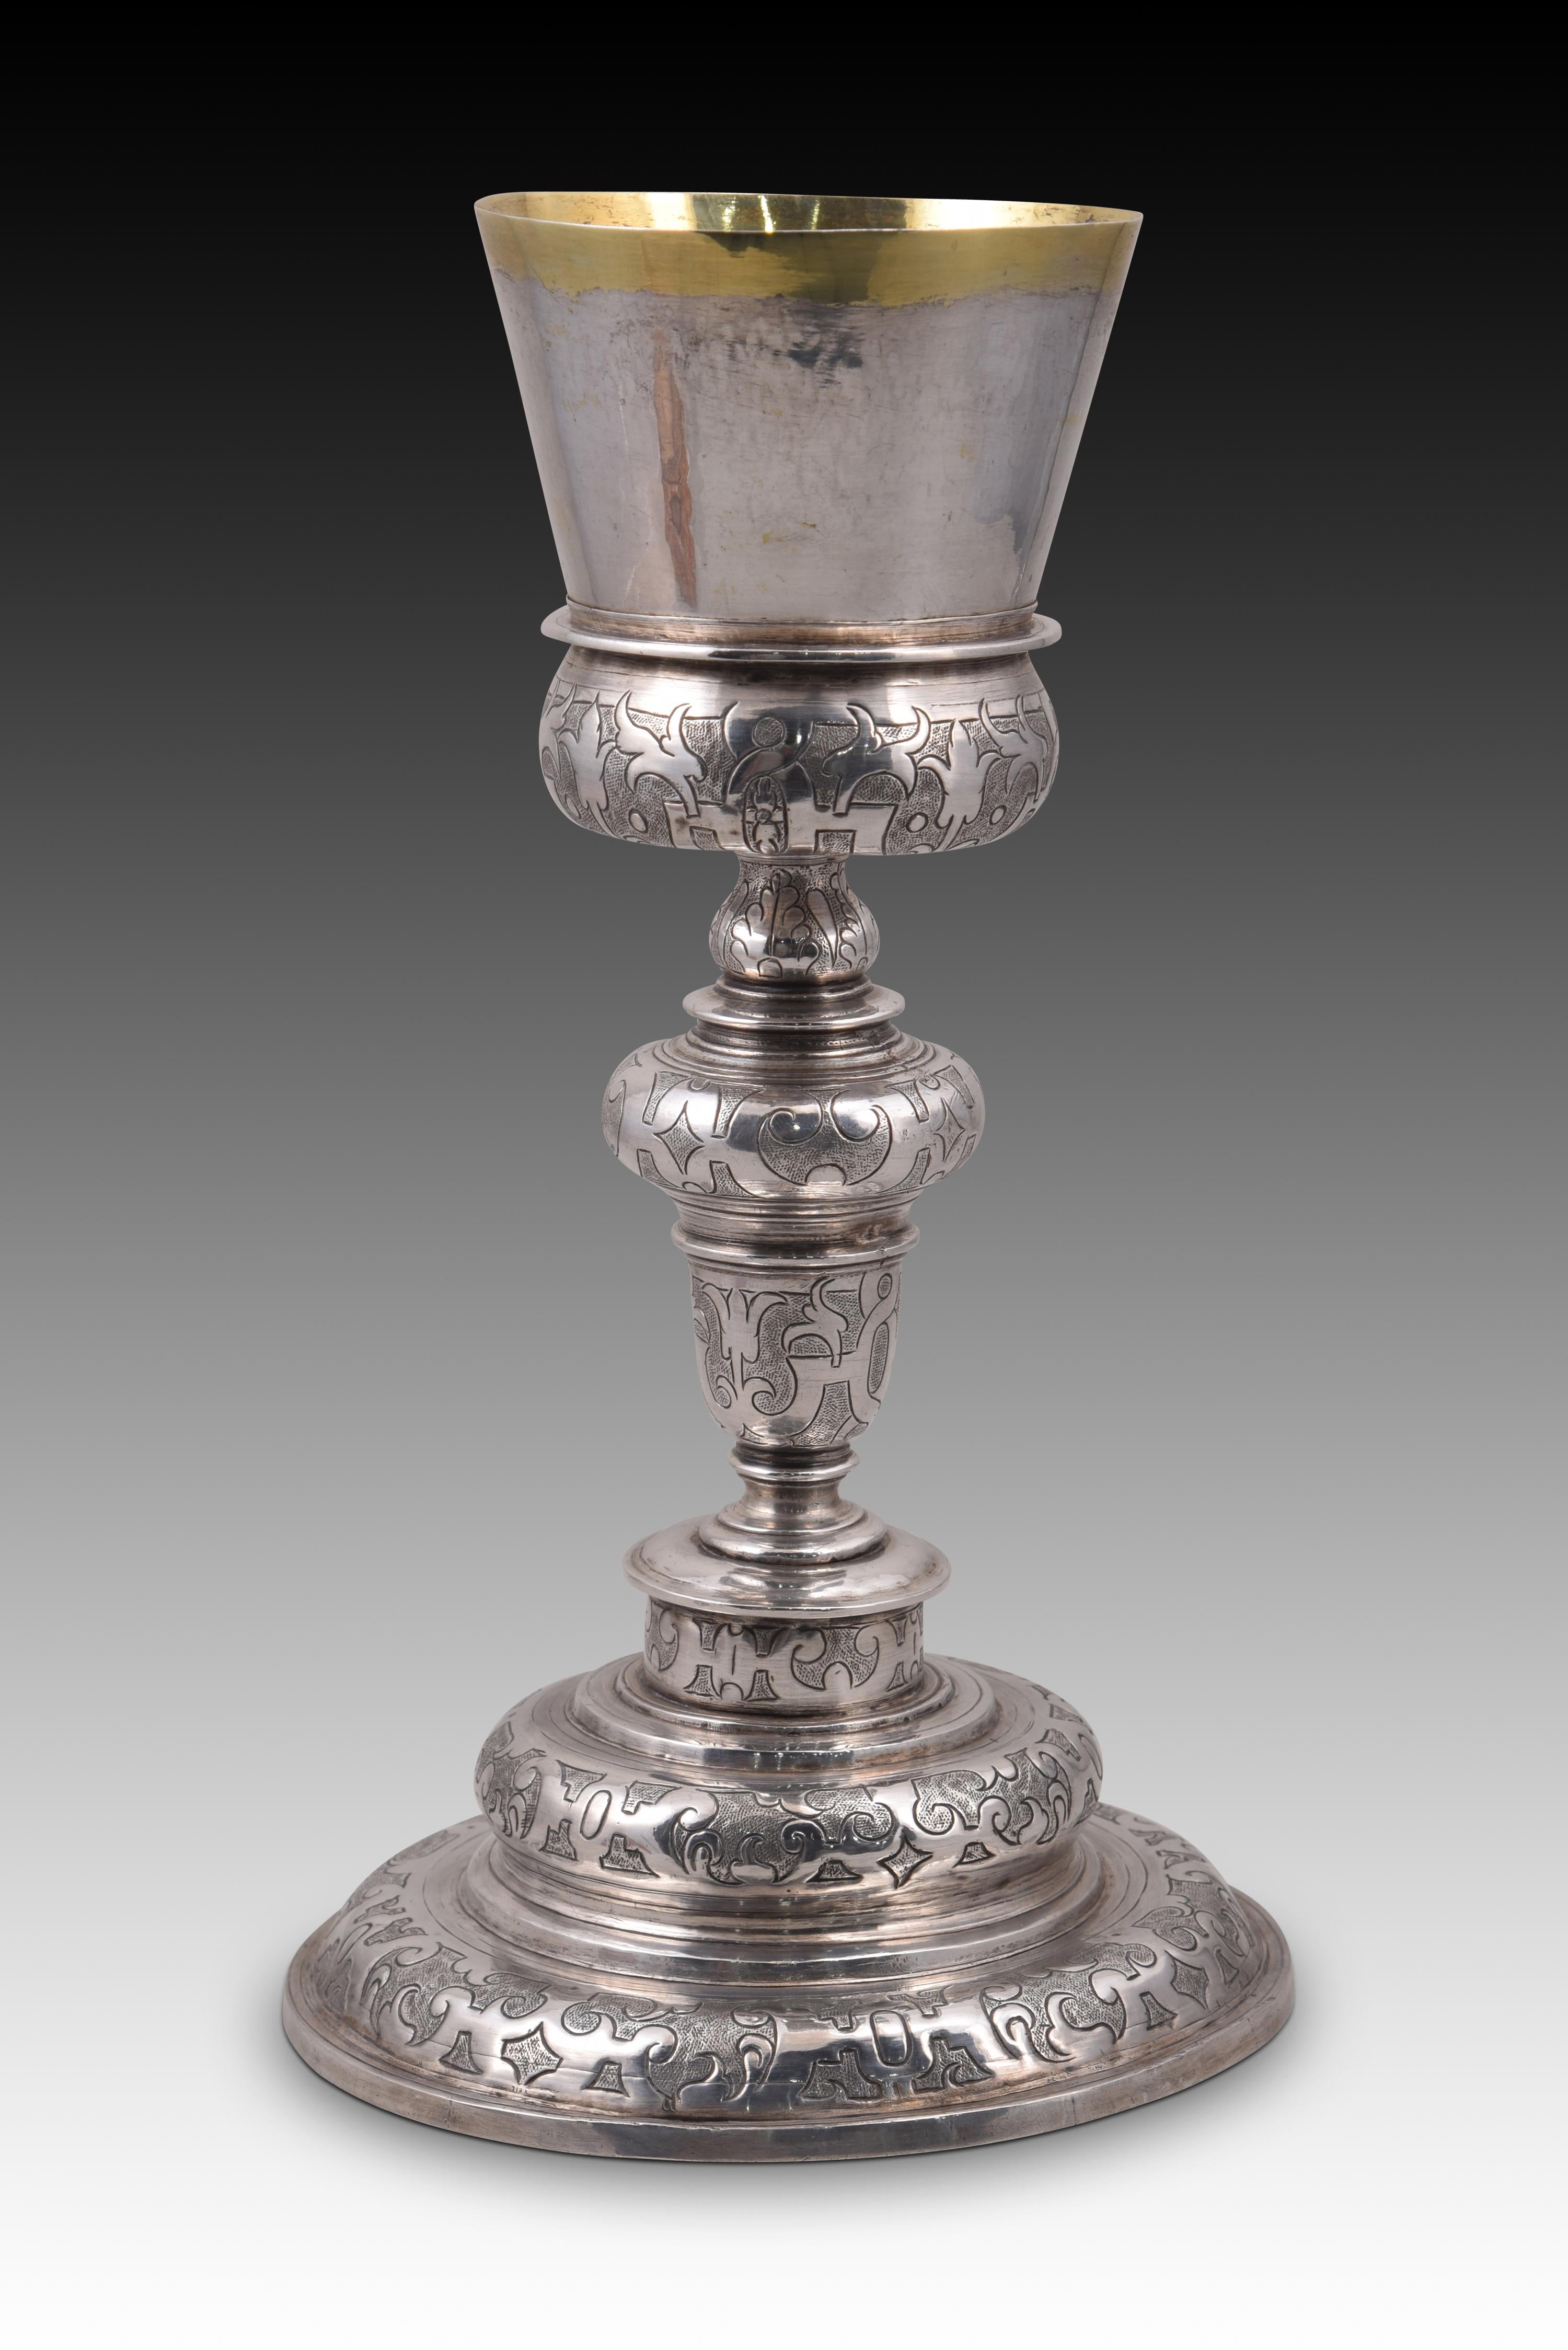 Baroque Solid silver chalice. Spain, 17th century